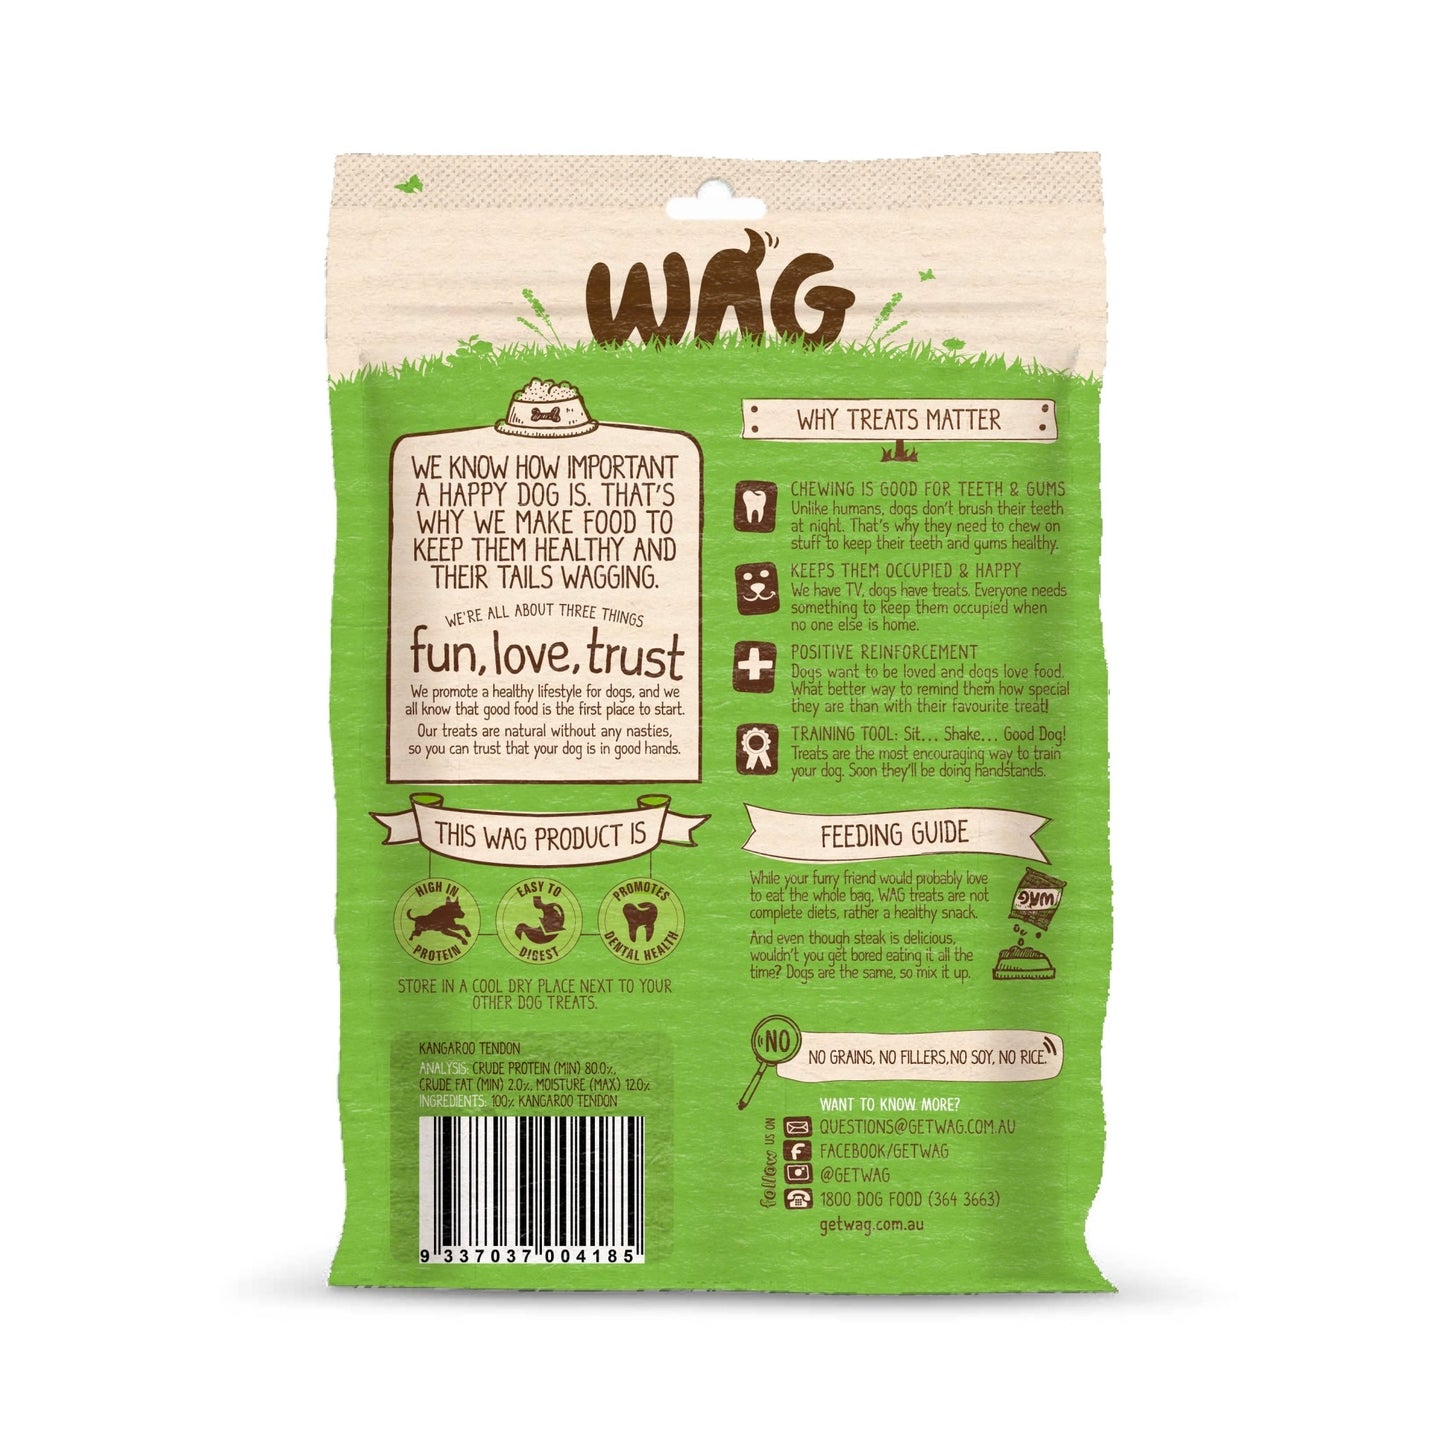 WAG Kangaroo Tendons 200g - Woonona Petfood & Produce